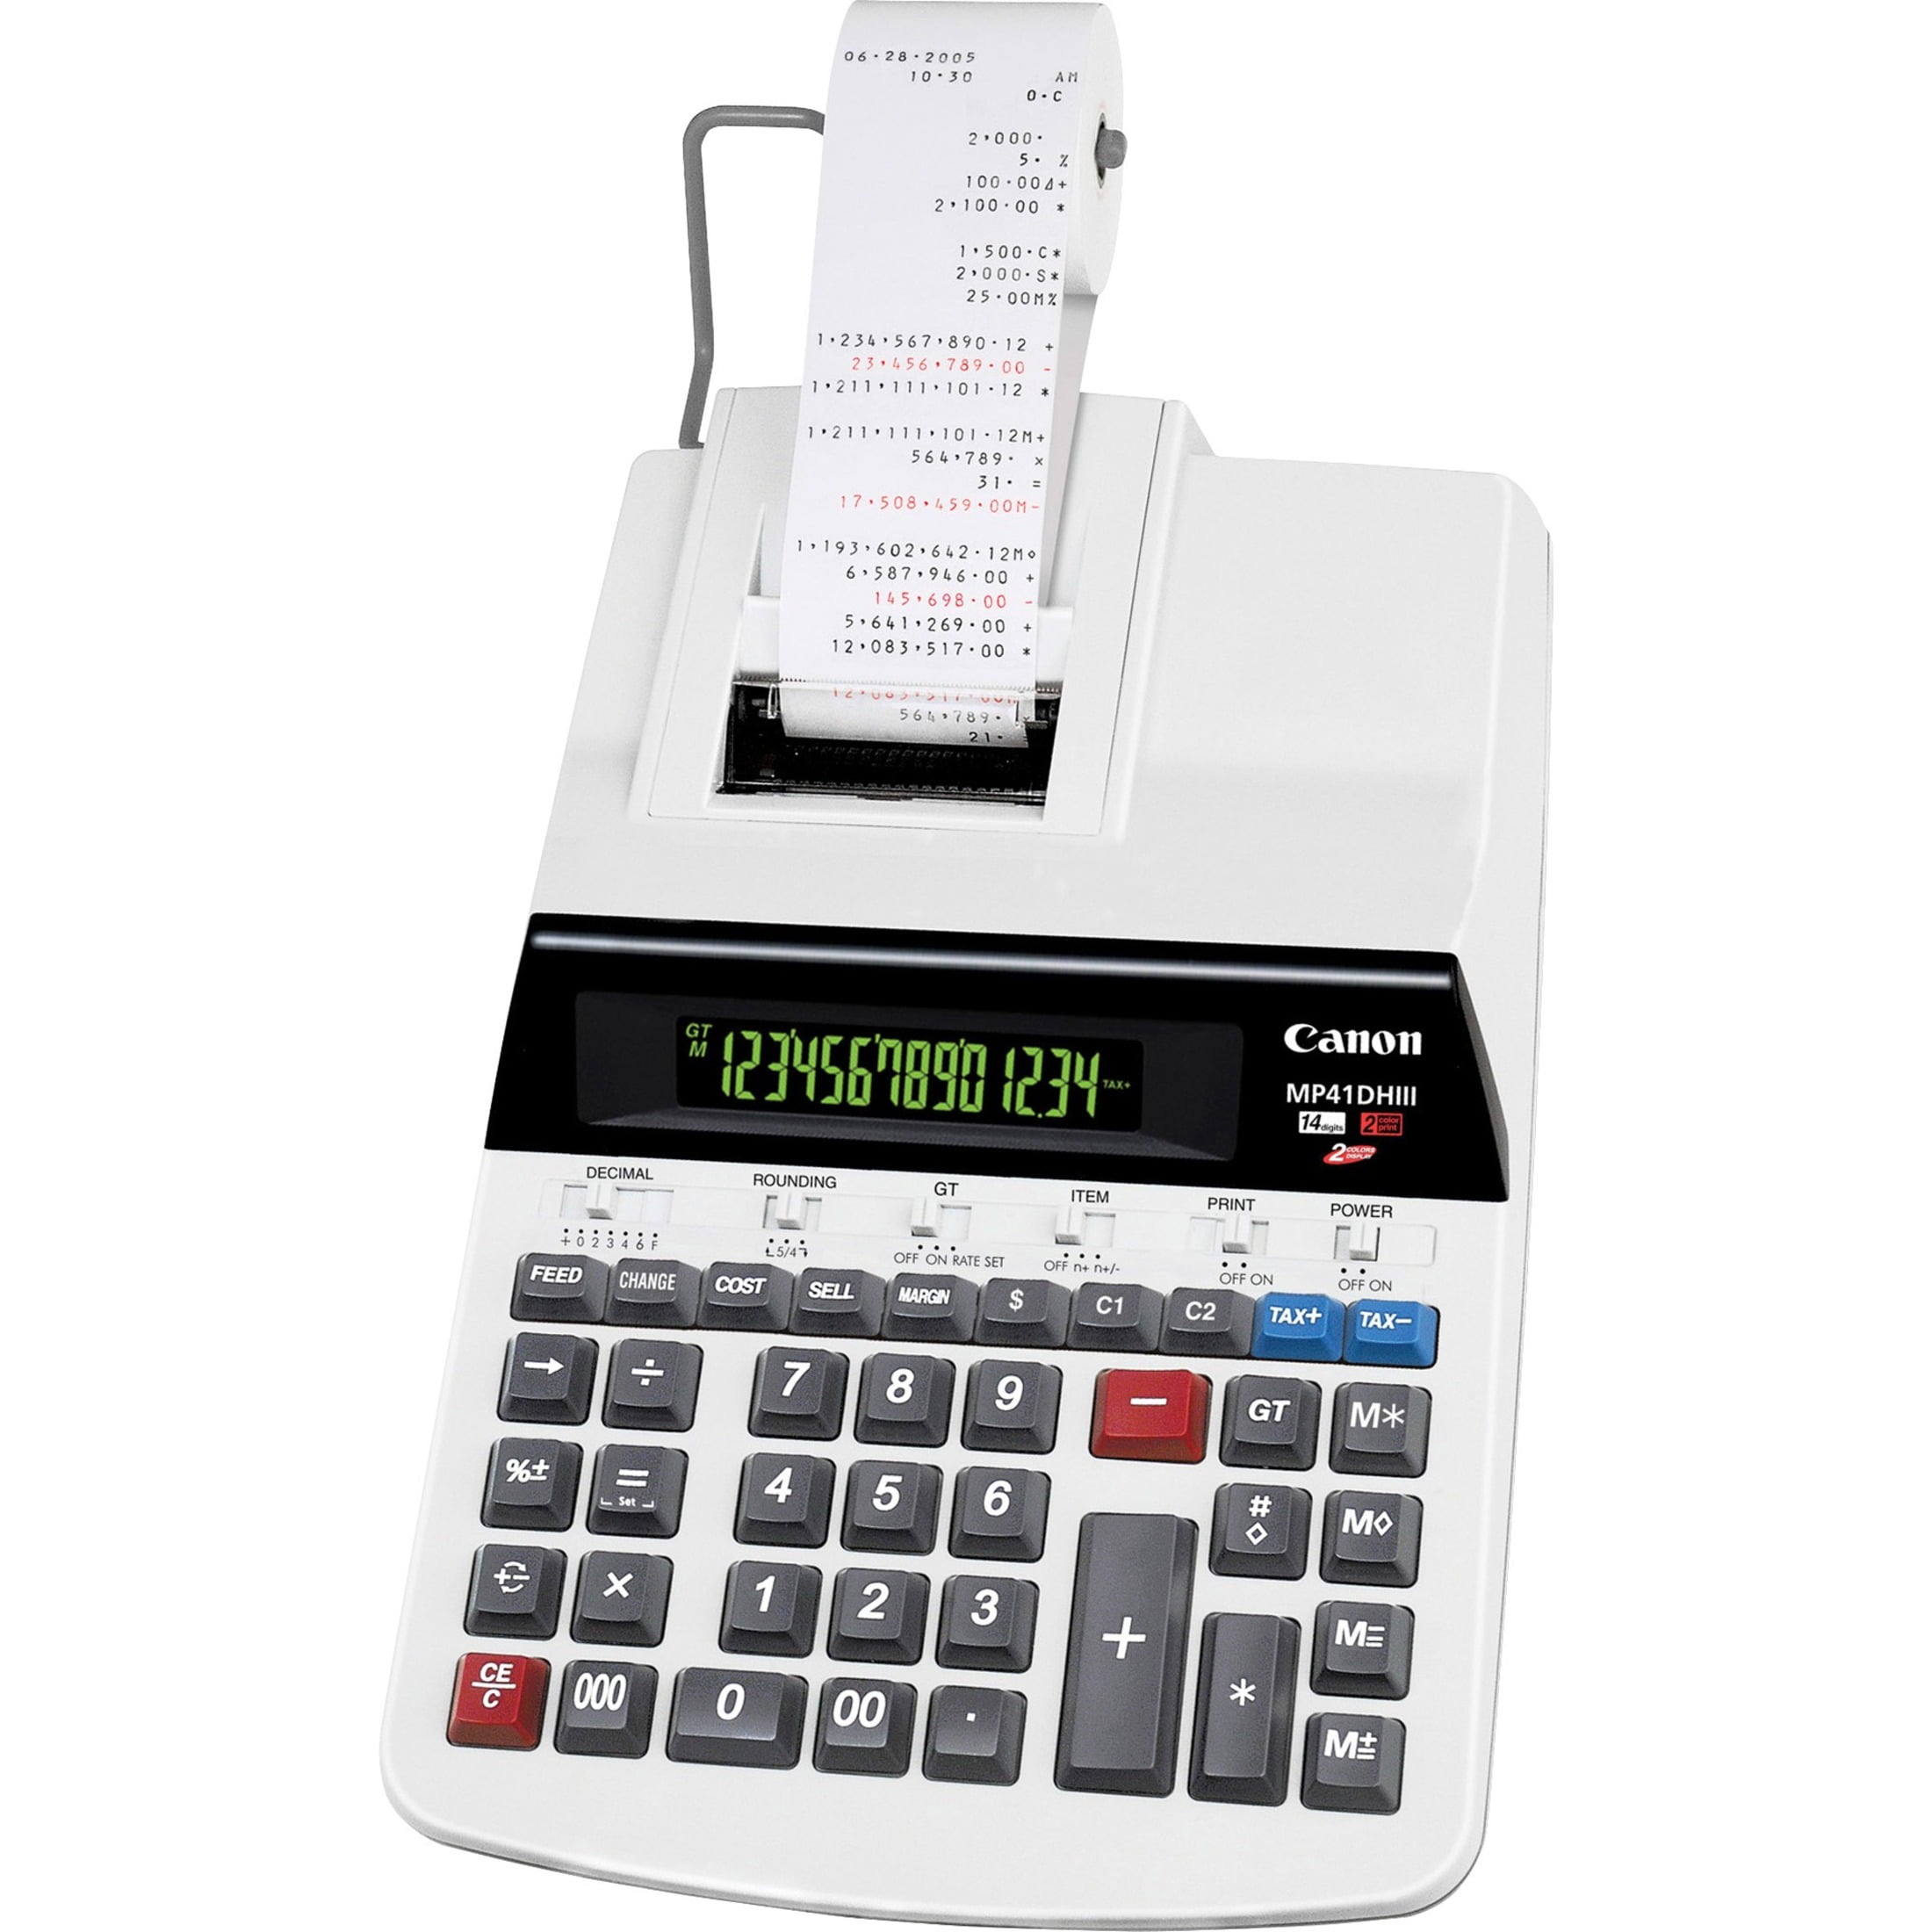 Sharp EL-1197PIII Printing Calculator for sale online 